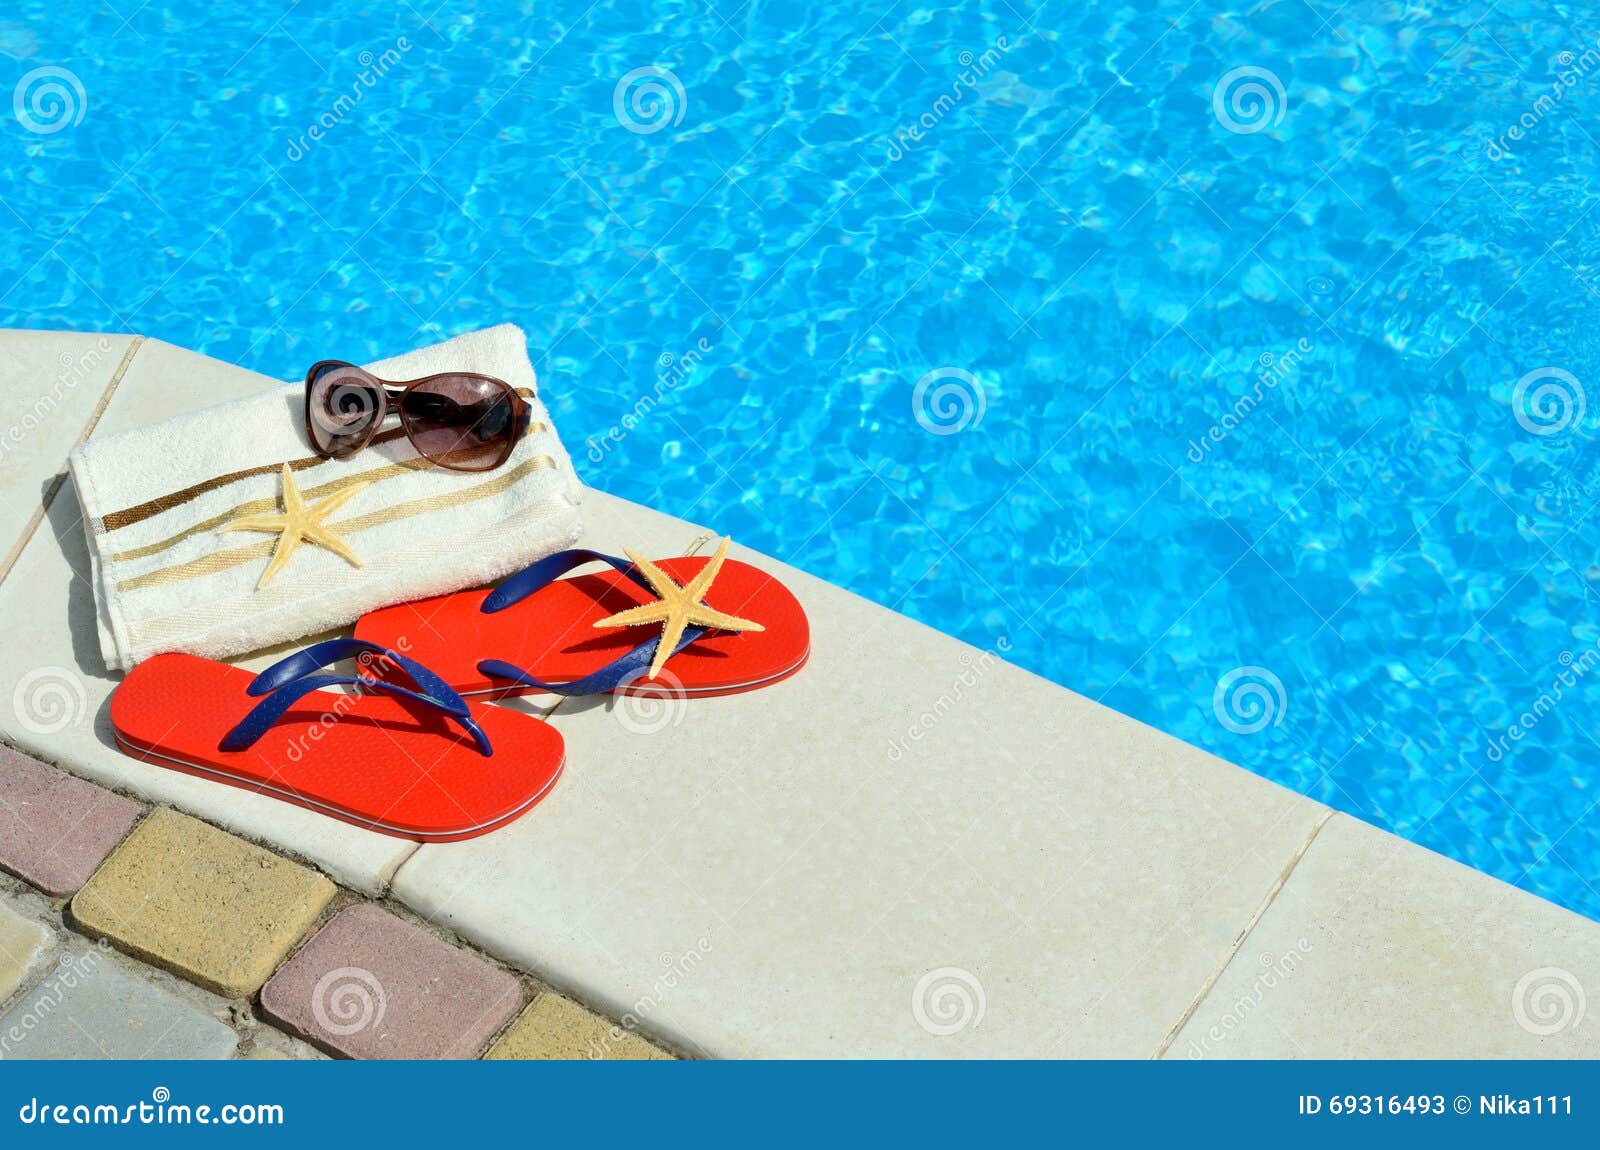 flip-flops, sunglasses, towel, starfish.